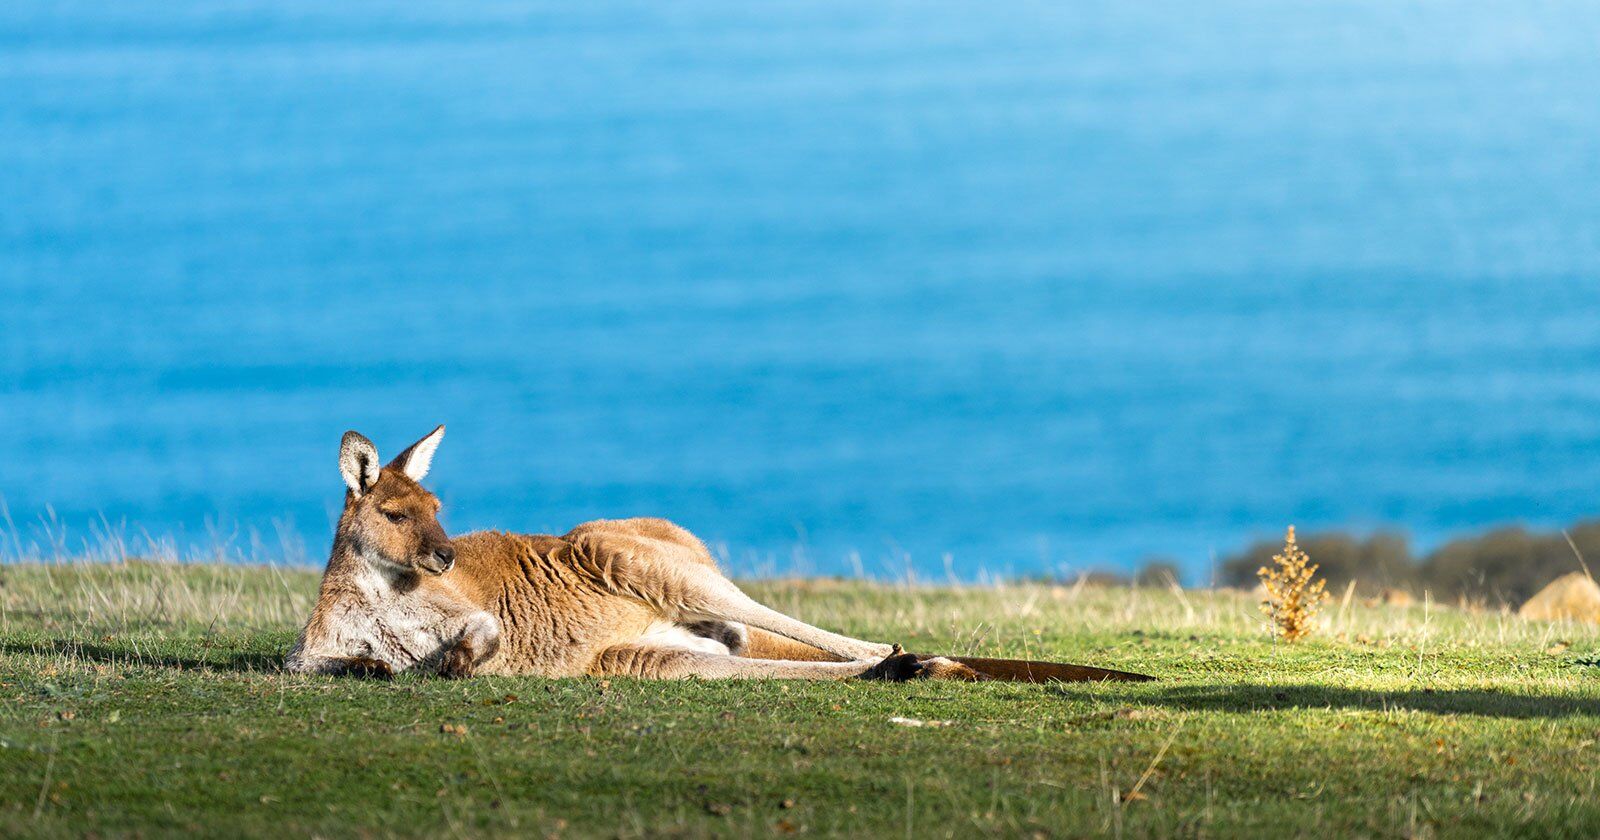 laid back kangaroo promoting Australian laid back culture